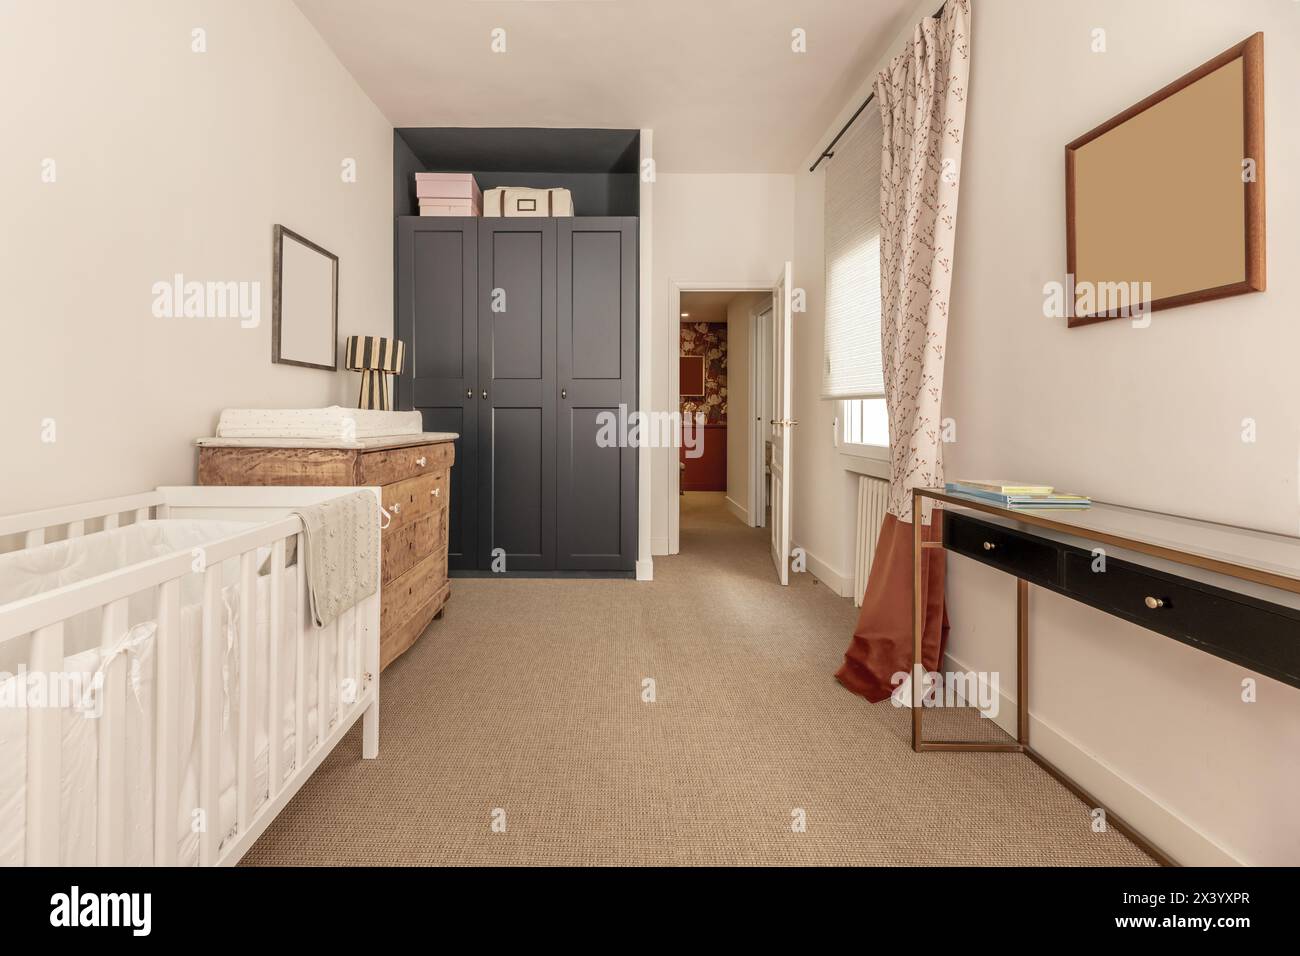 Children's bedroom with white wooden crib, blue wooden built-in wardrobe, vegetal fiber carpet floors and antique wooden appliances Stock Photo